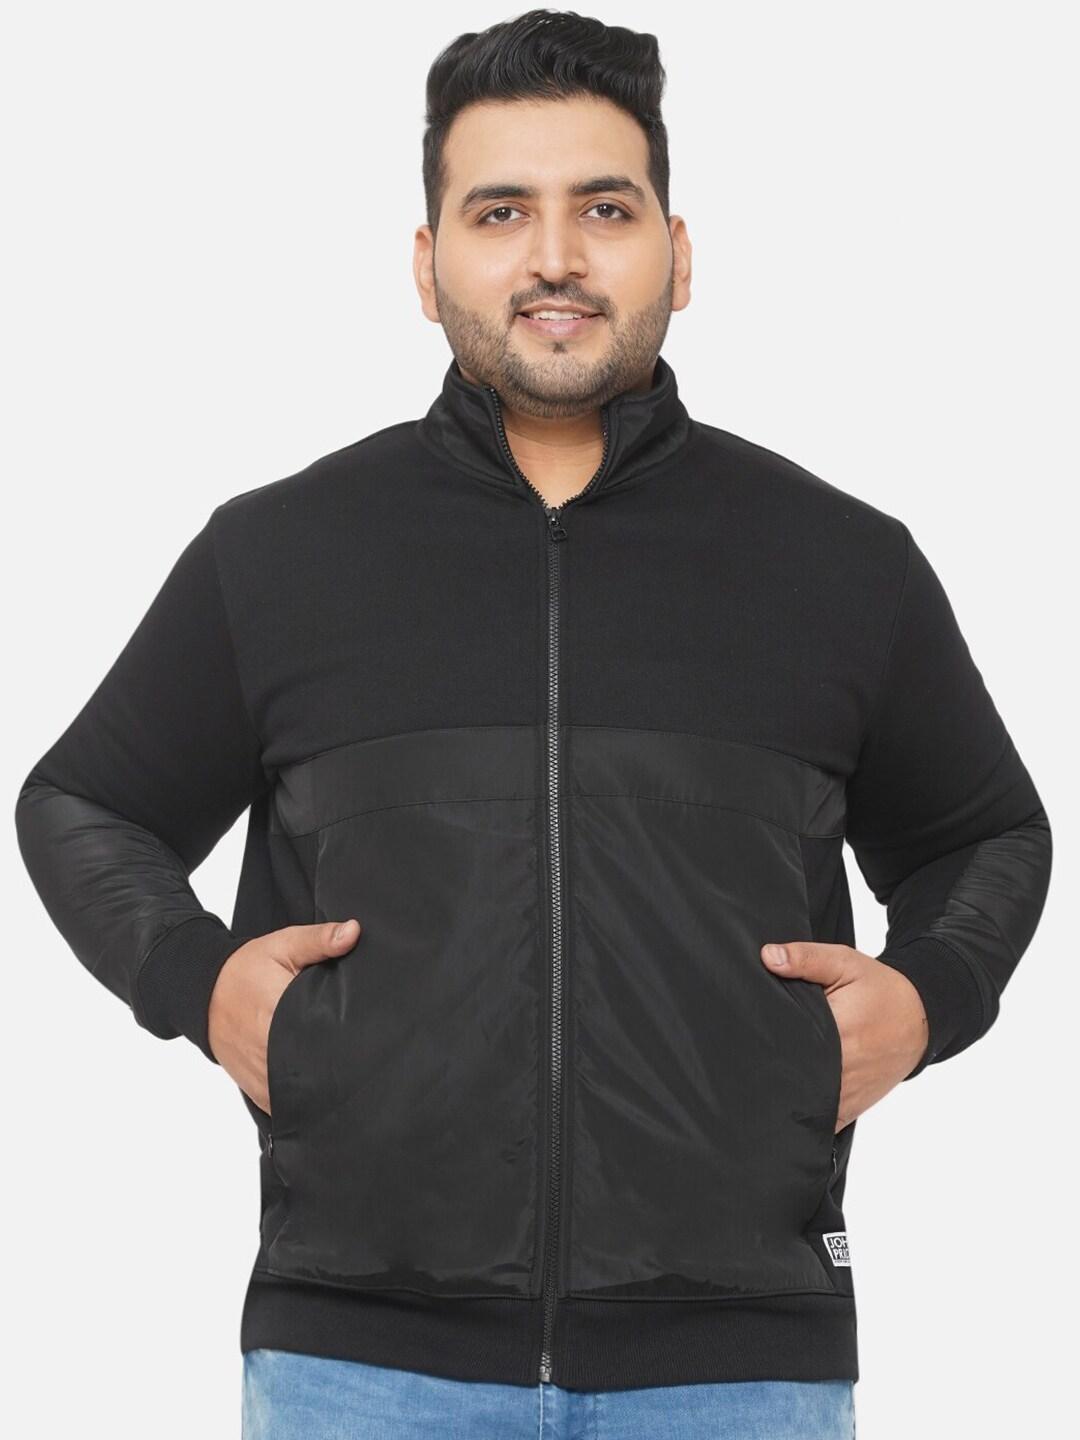 John Pride Plus-Size Men Black Sweatshirt